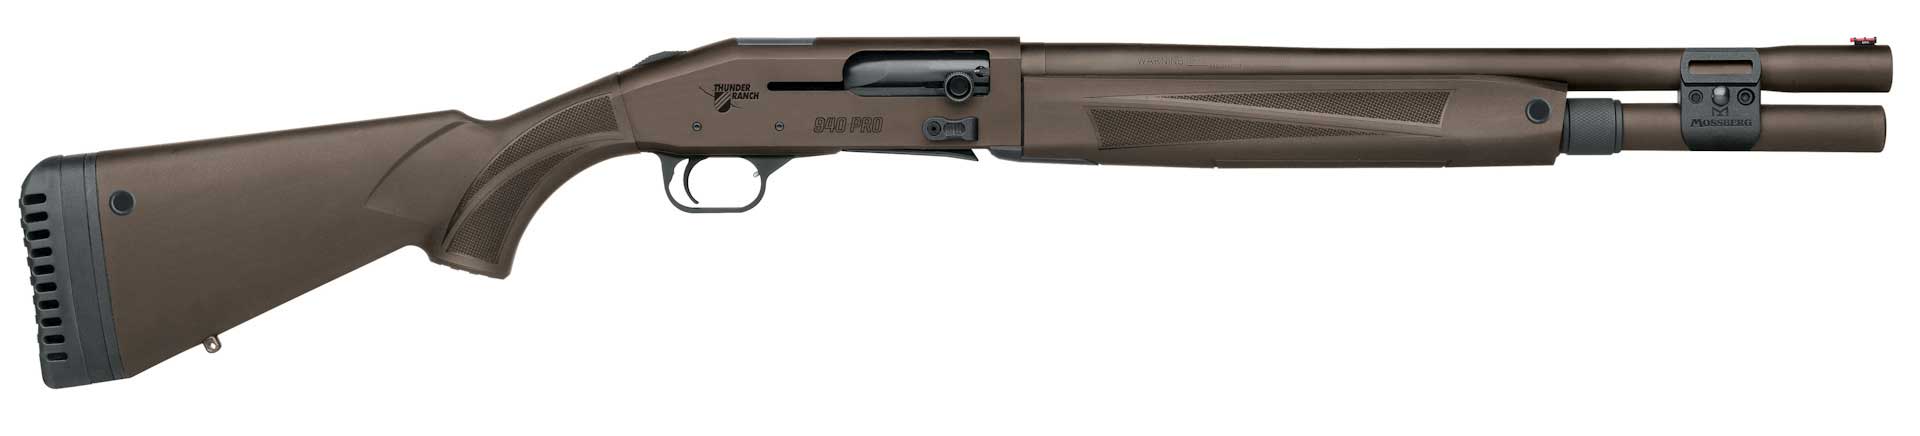 Mossberg 940 Pro Shotgun Thunder Ranch Edition